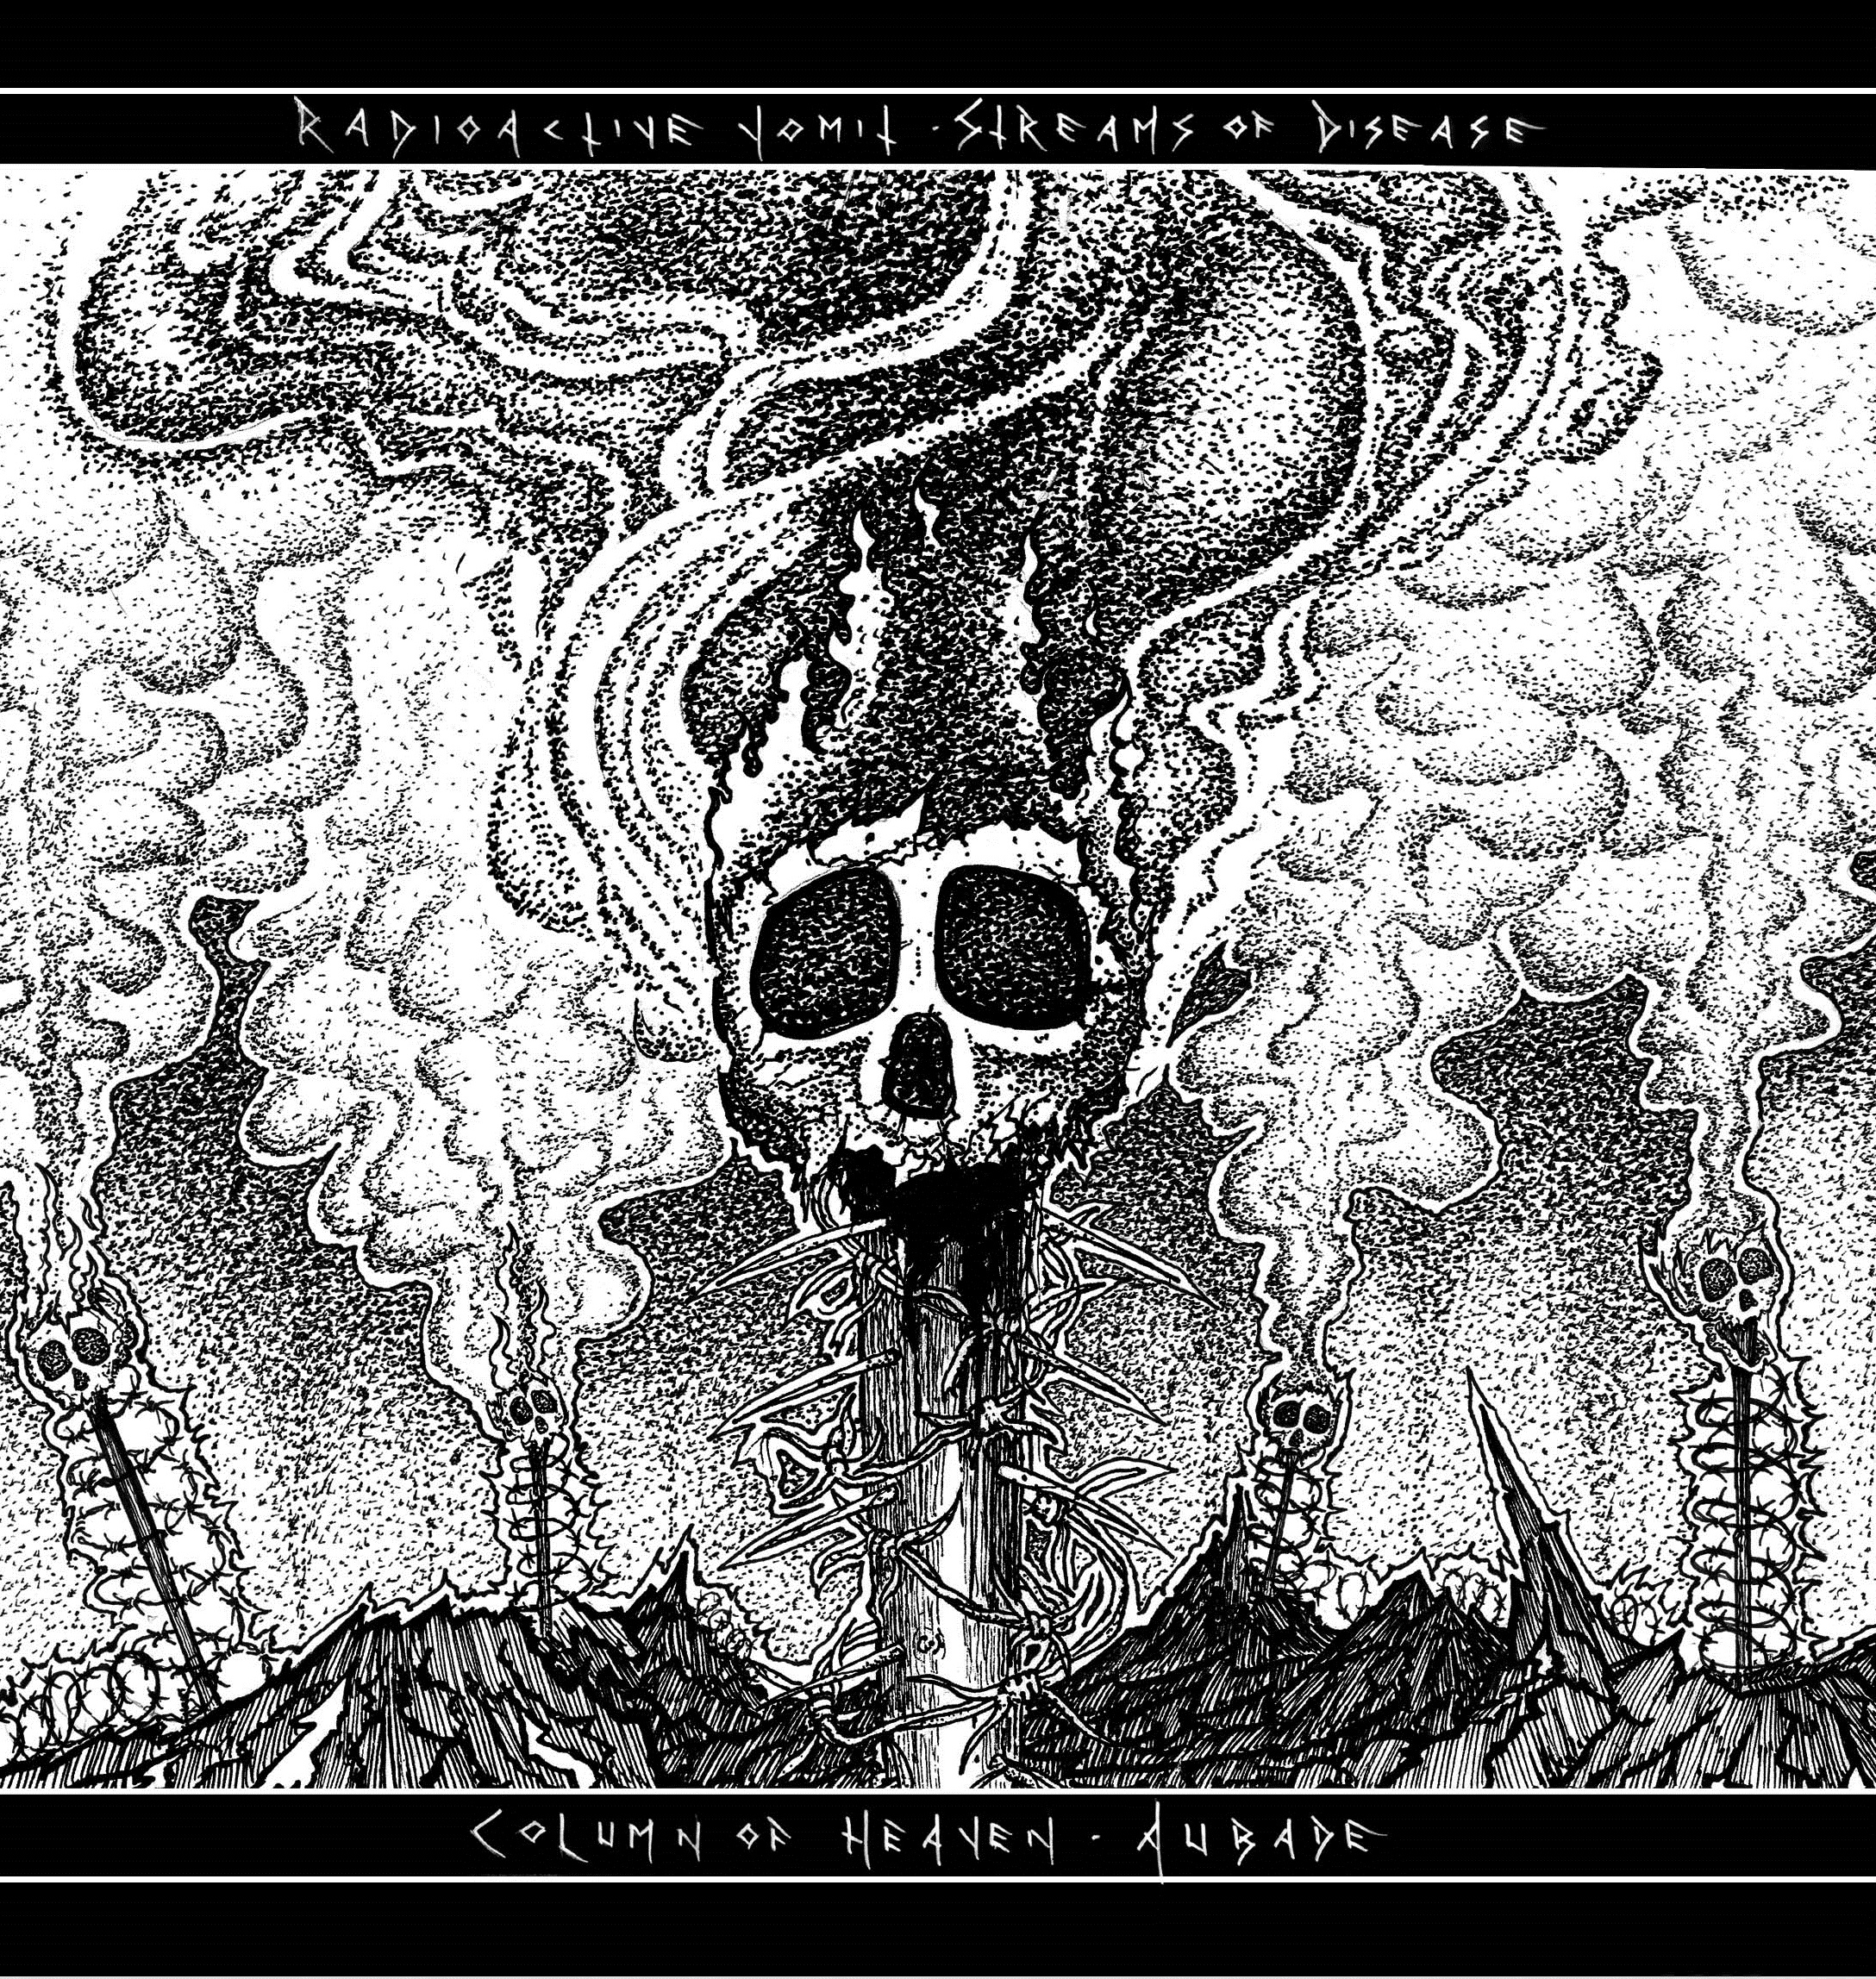 Radioactive Vomit / Column of Heaven - split 7"